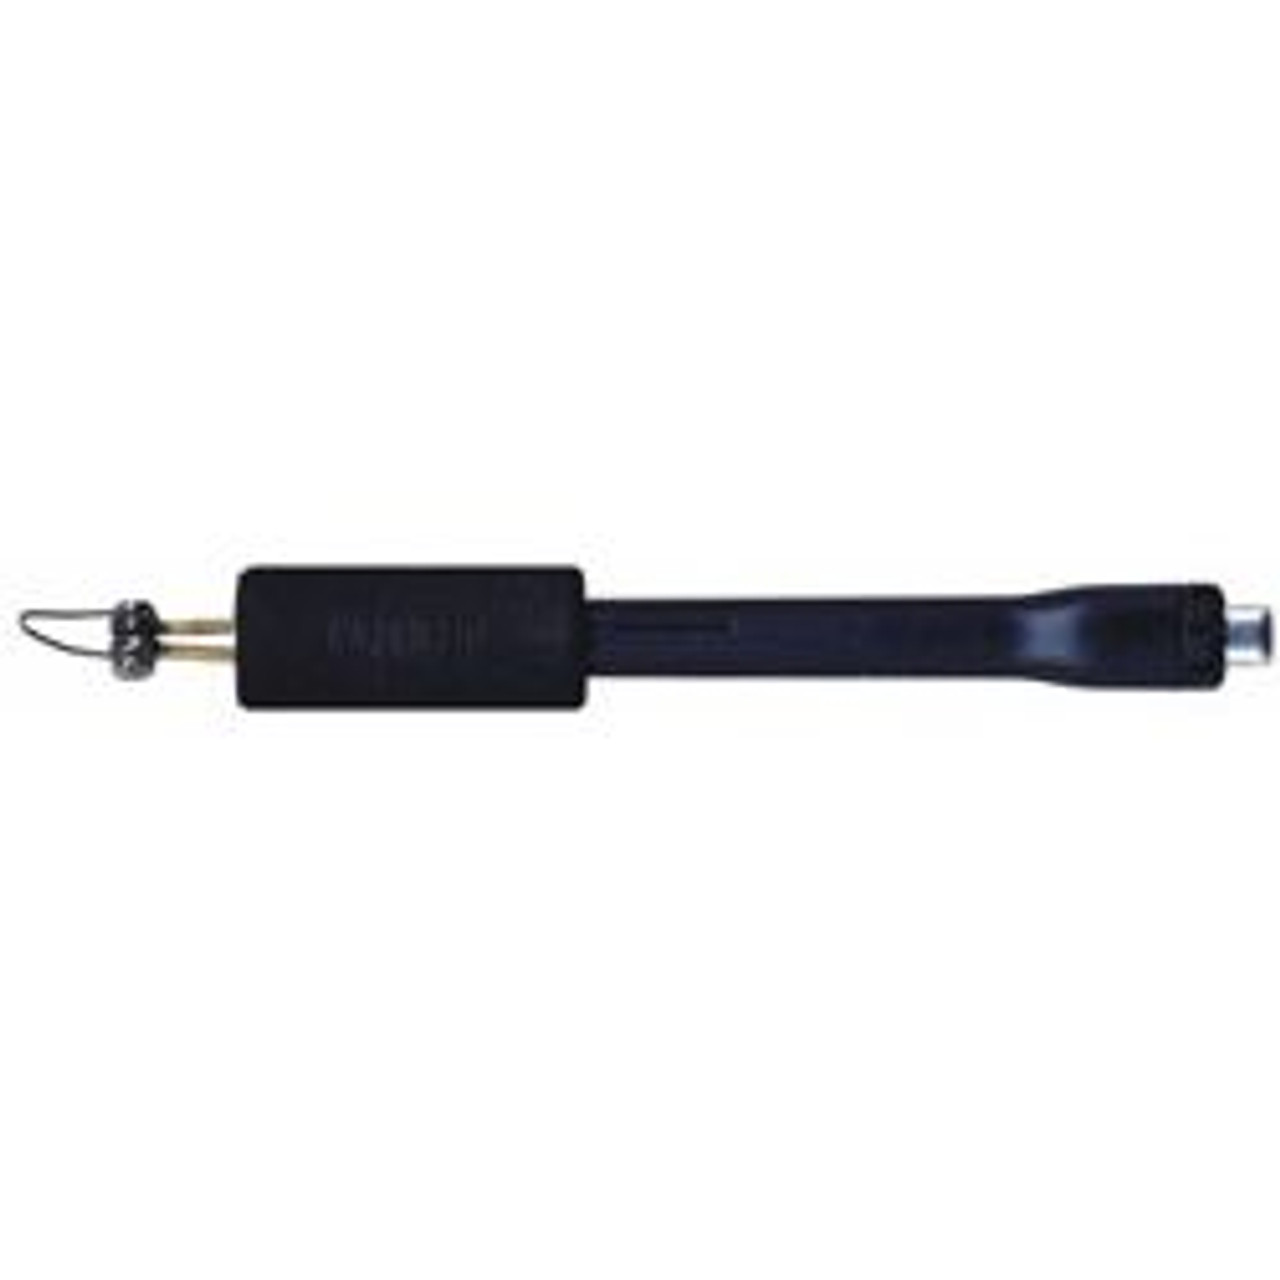 Razertip Binding Post Interchangeable Tip Woodburning  Pen, showing the 3" length of the pen.